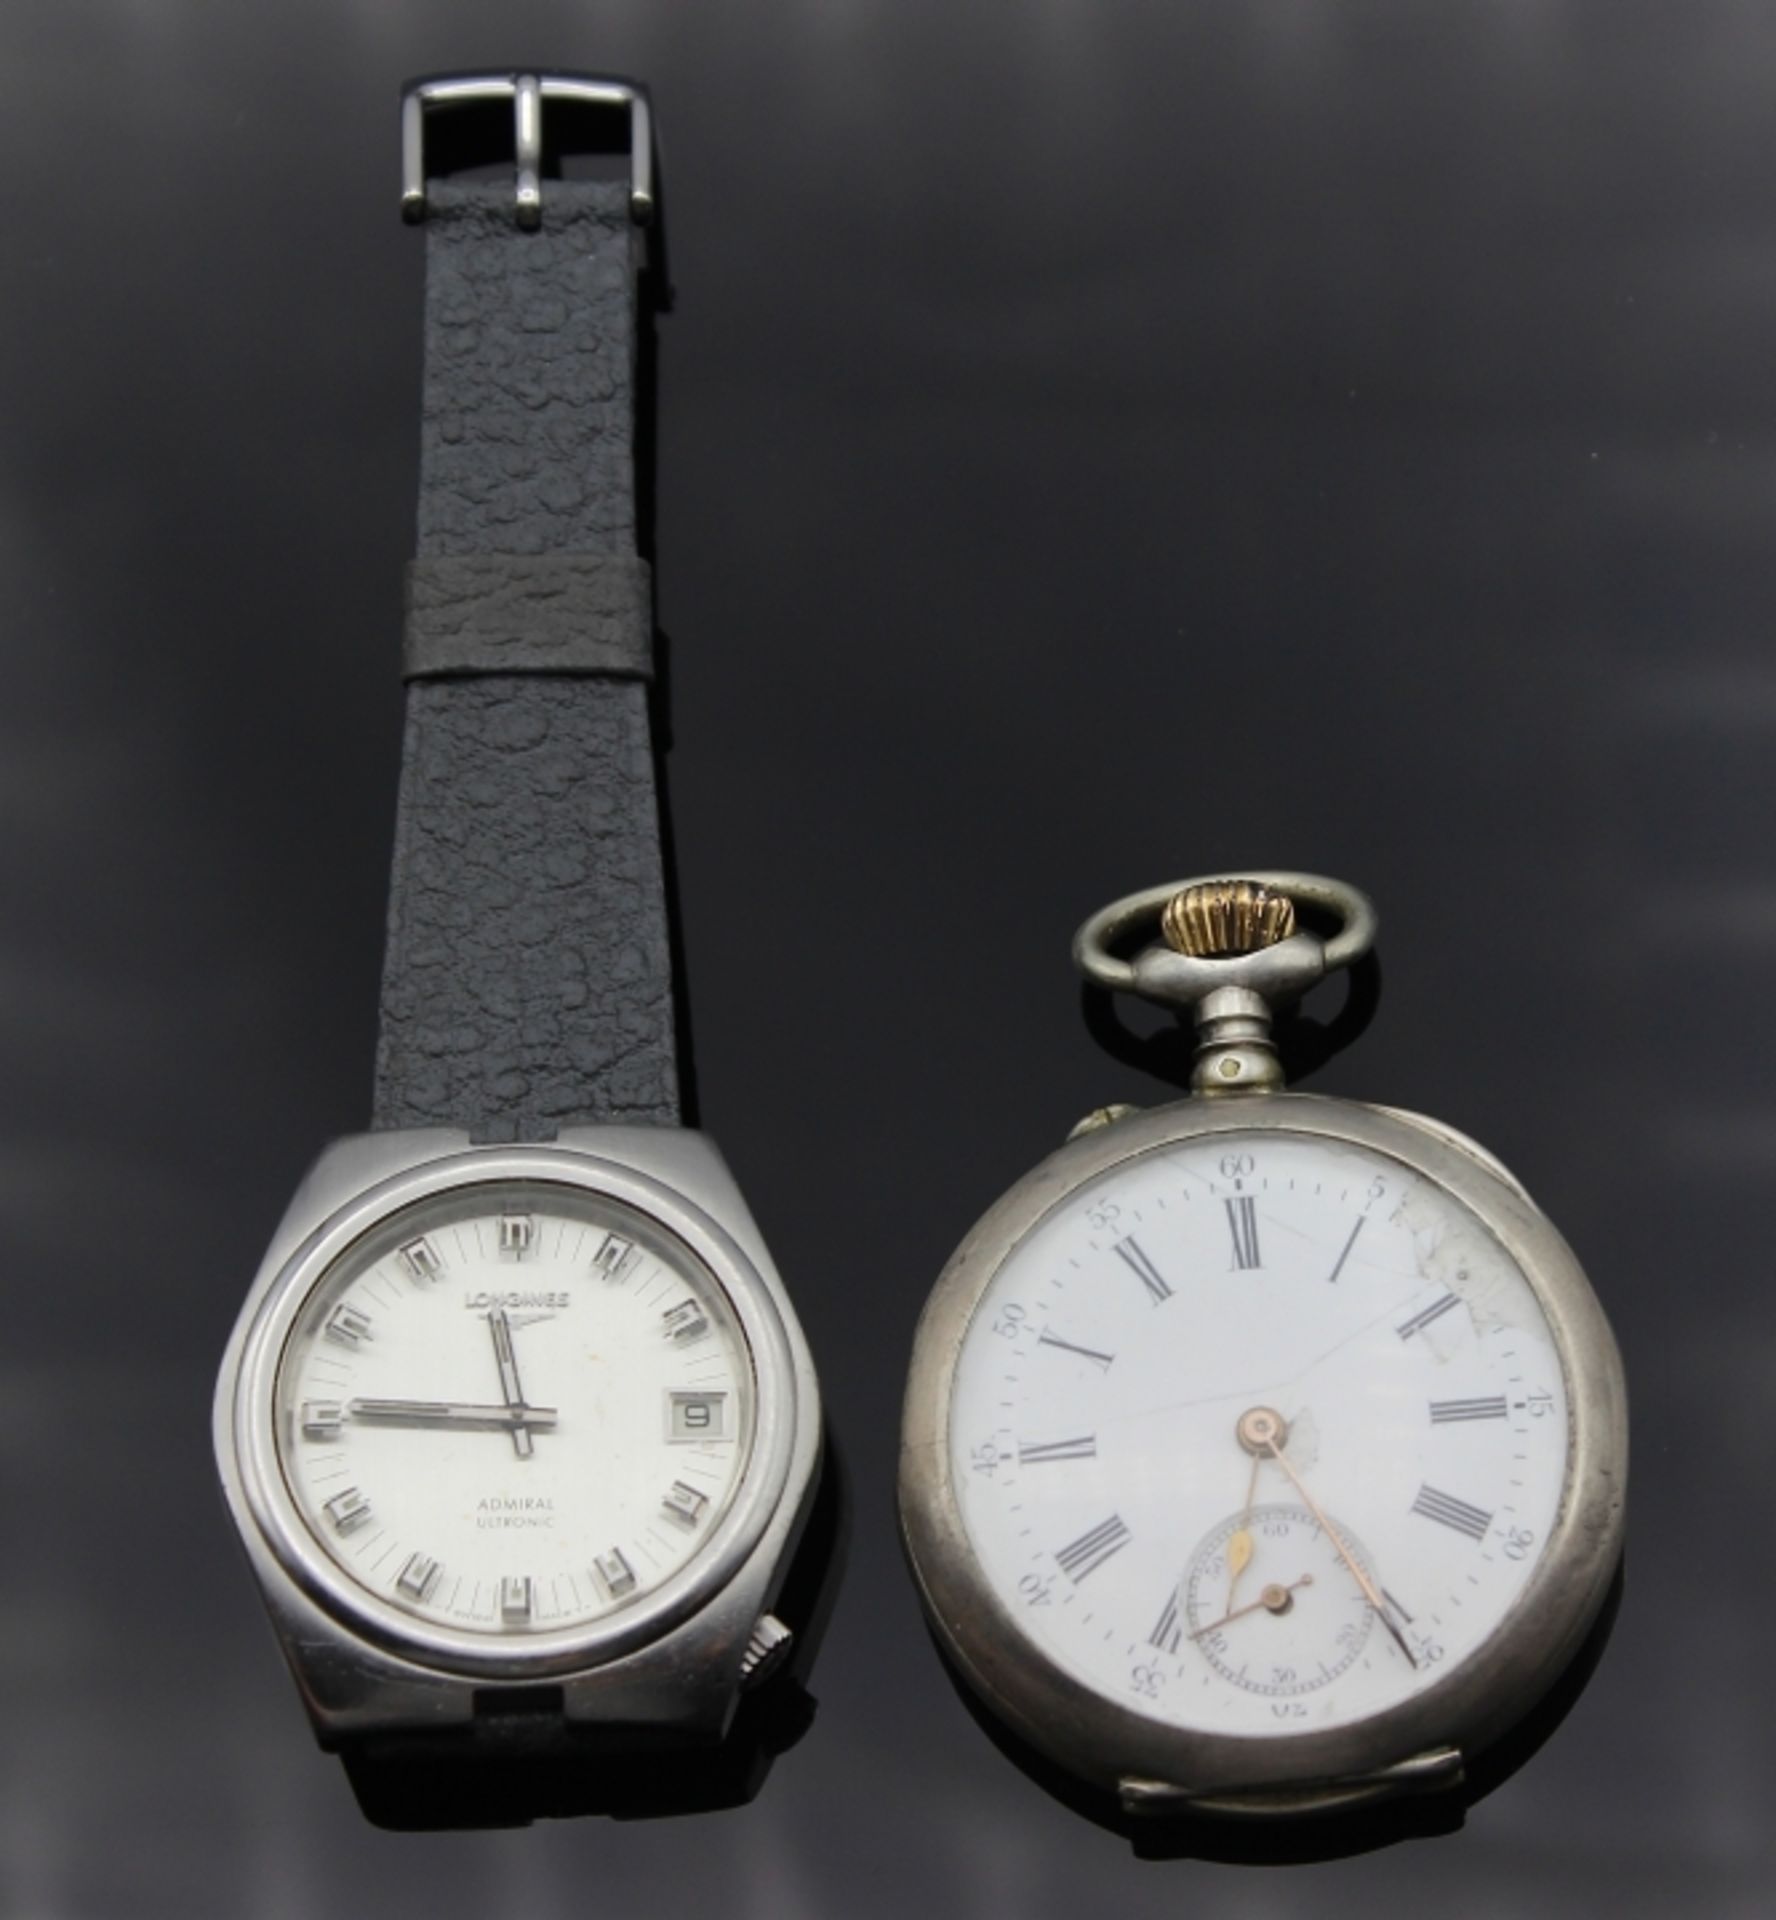 Lot Uhren 1. Armbanduhr, Marke Longines, Modell Admiral Ultronic, silberfarbenes Metallzifferblatt